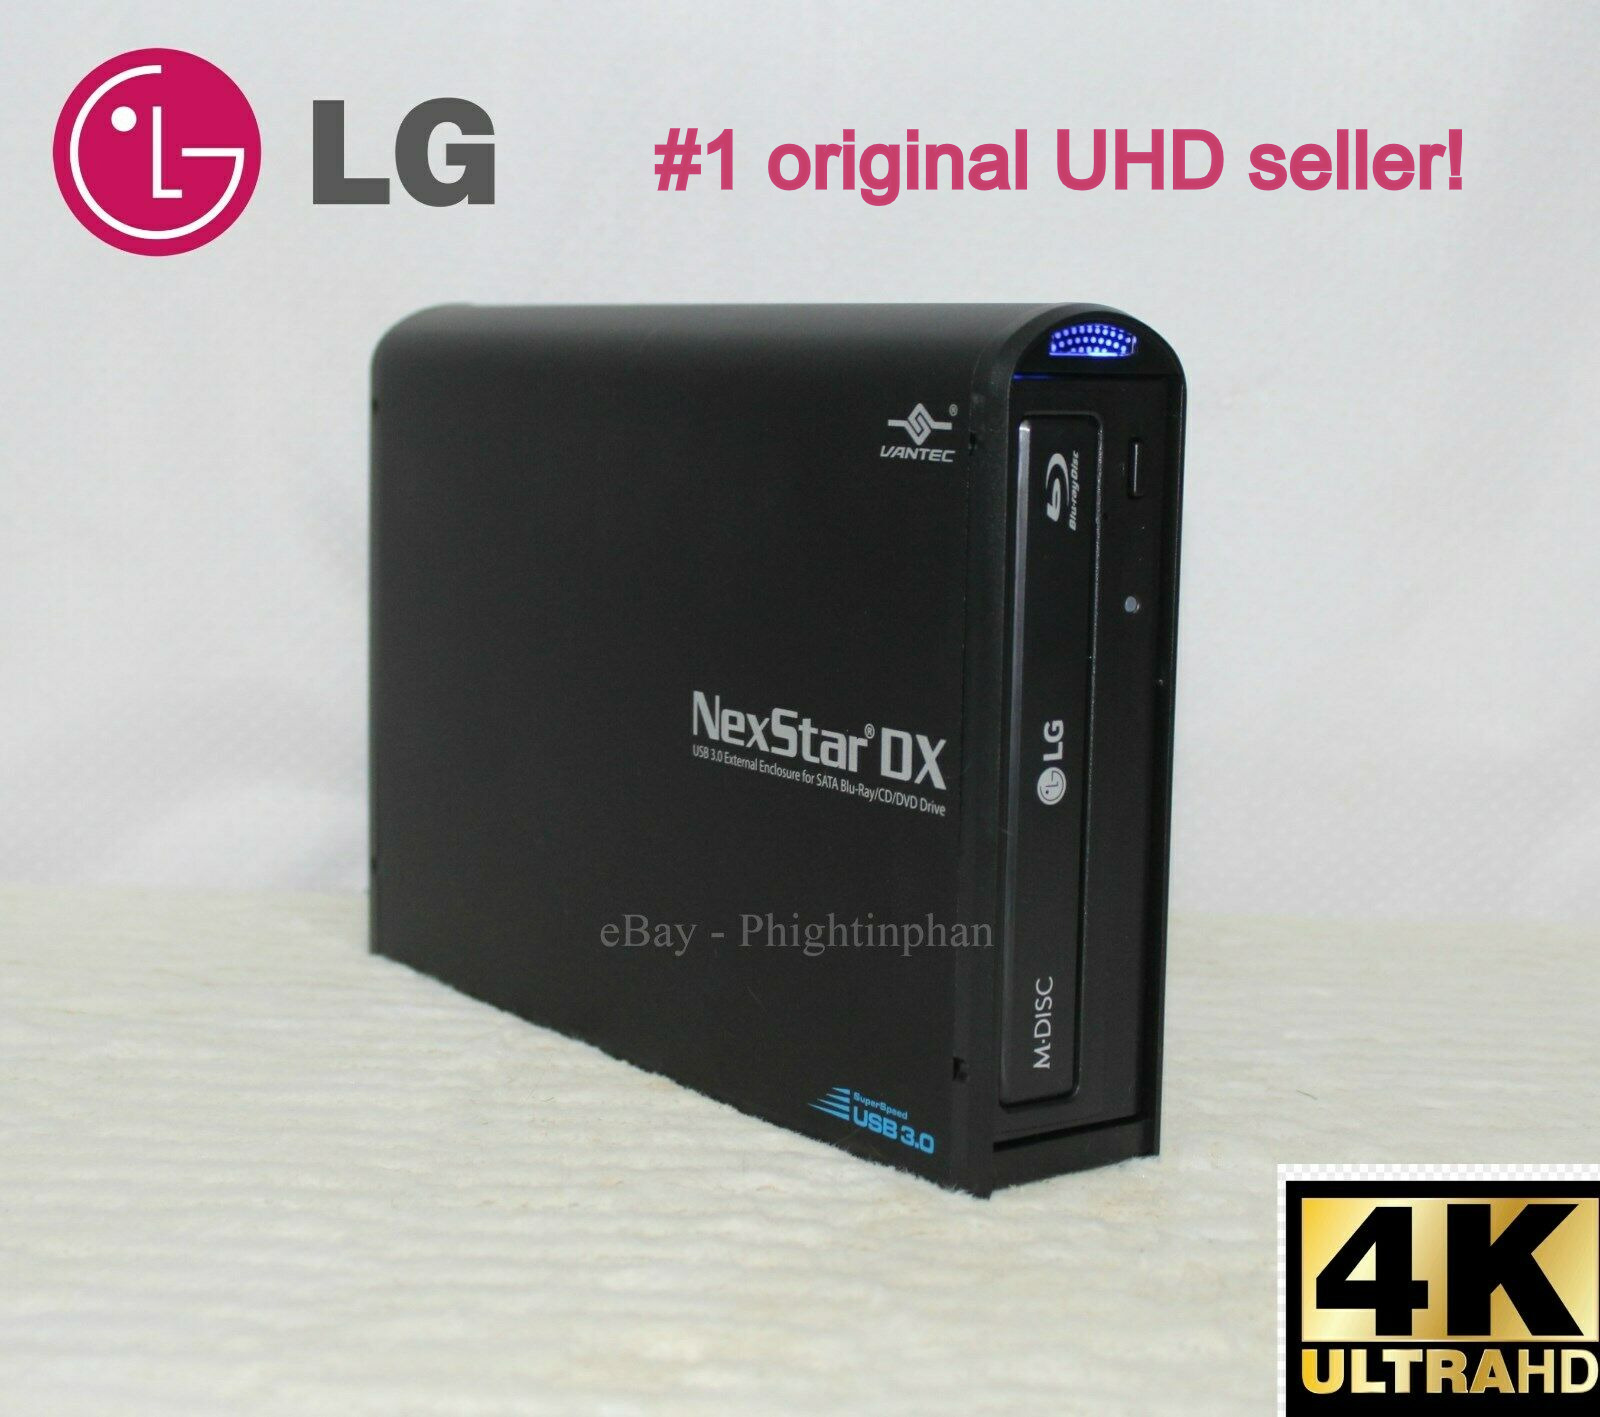 NEW External LG WH16NS40 Blu-ray drive firmware 1.02 4K, Ultra HD, UHD Friendly